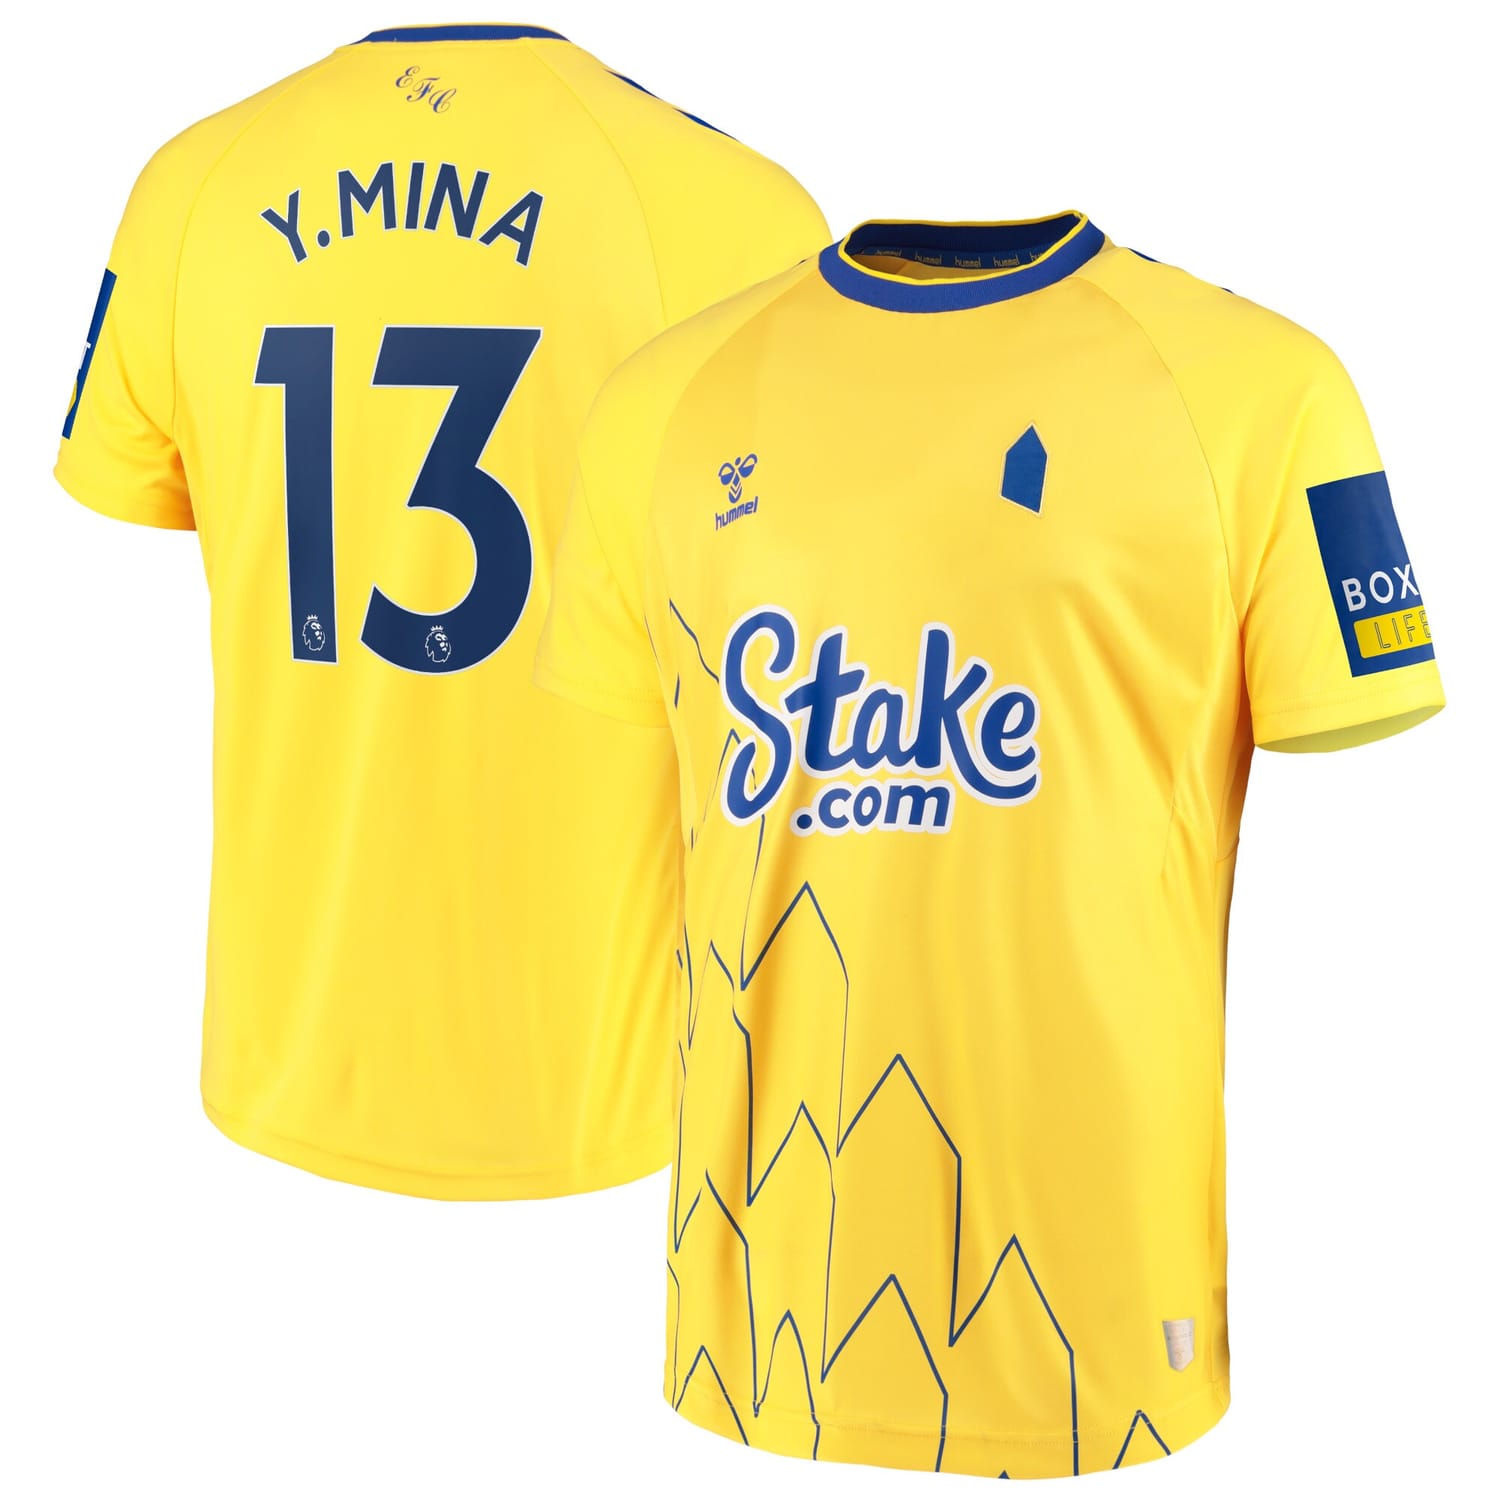 Premier League Everton Third Jersey Shirt 2022-23 player Yerry Mina 13 printing for Men